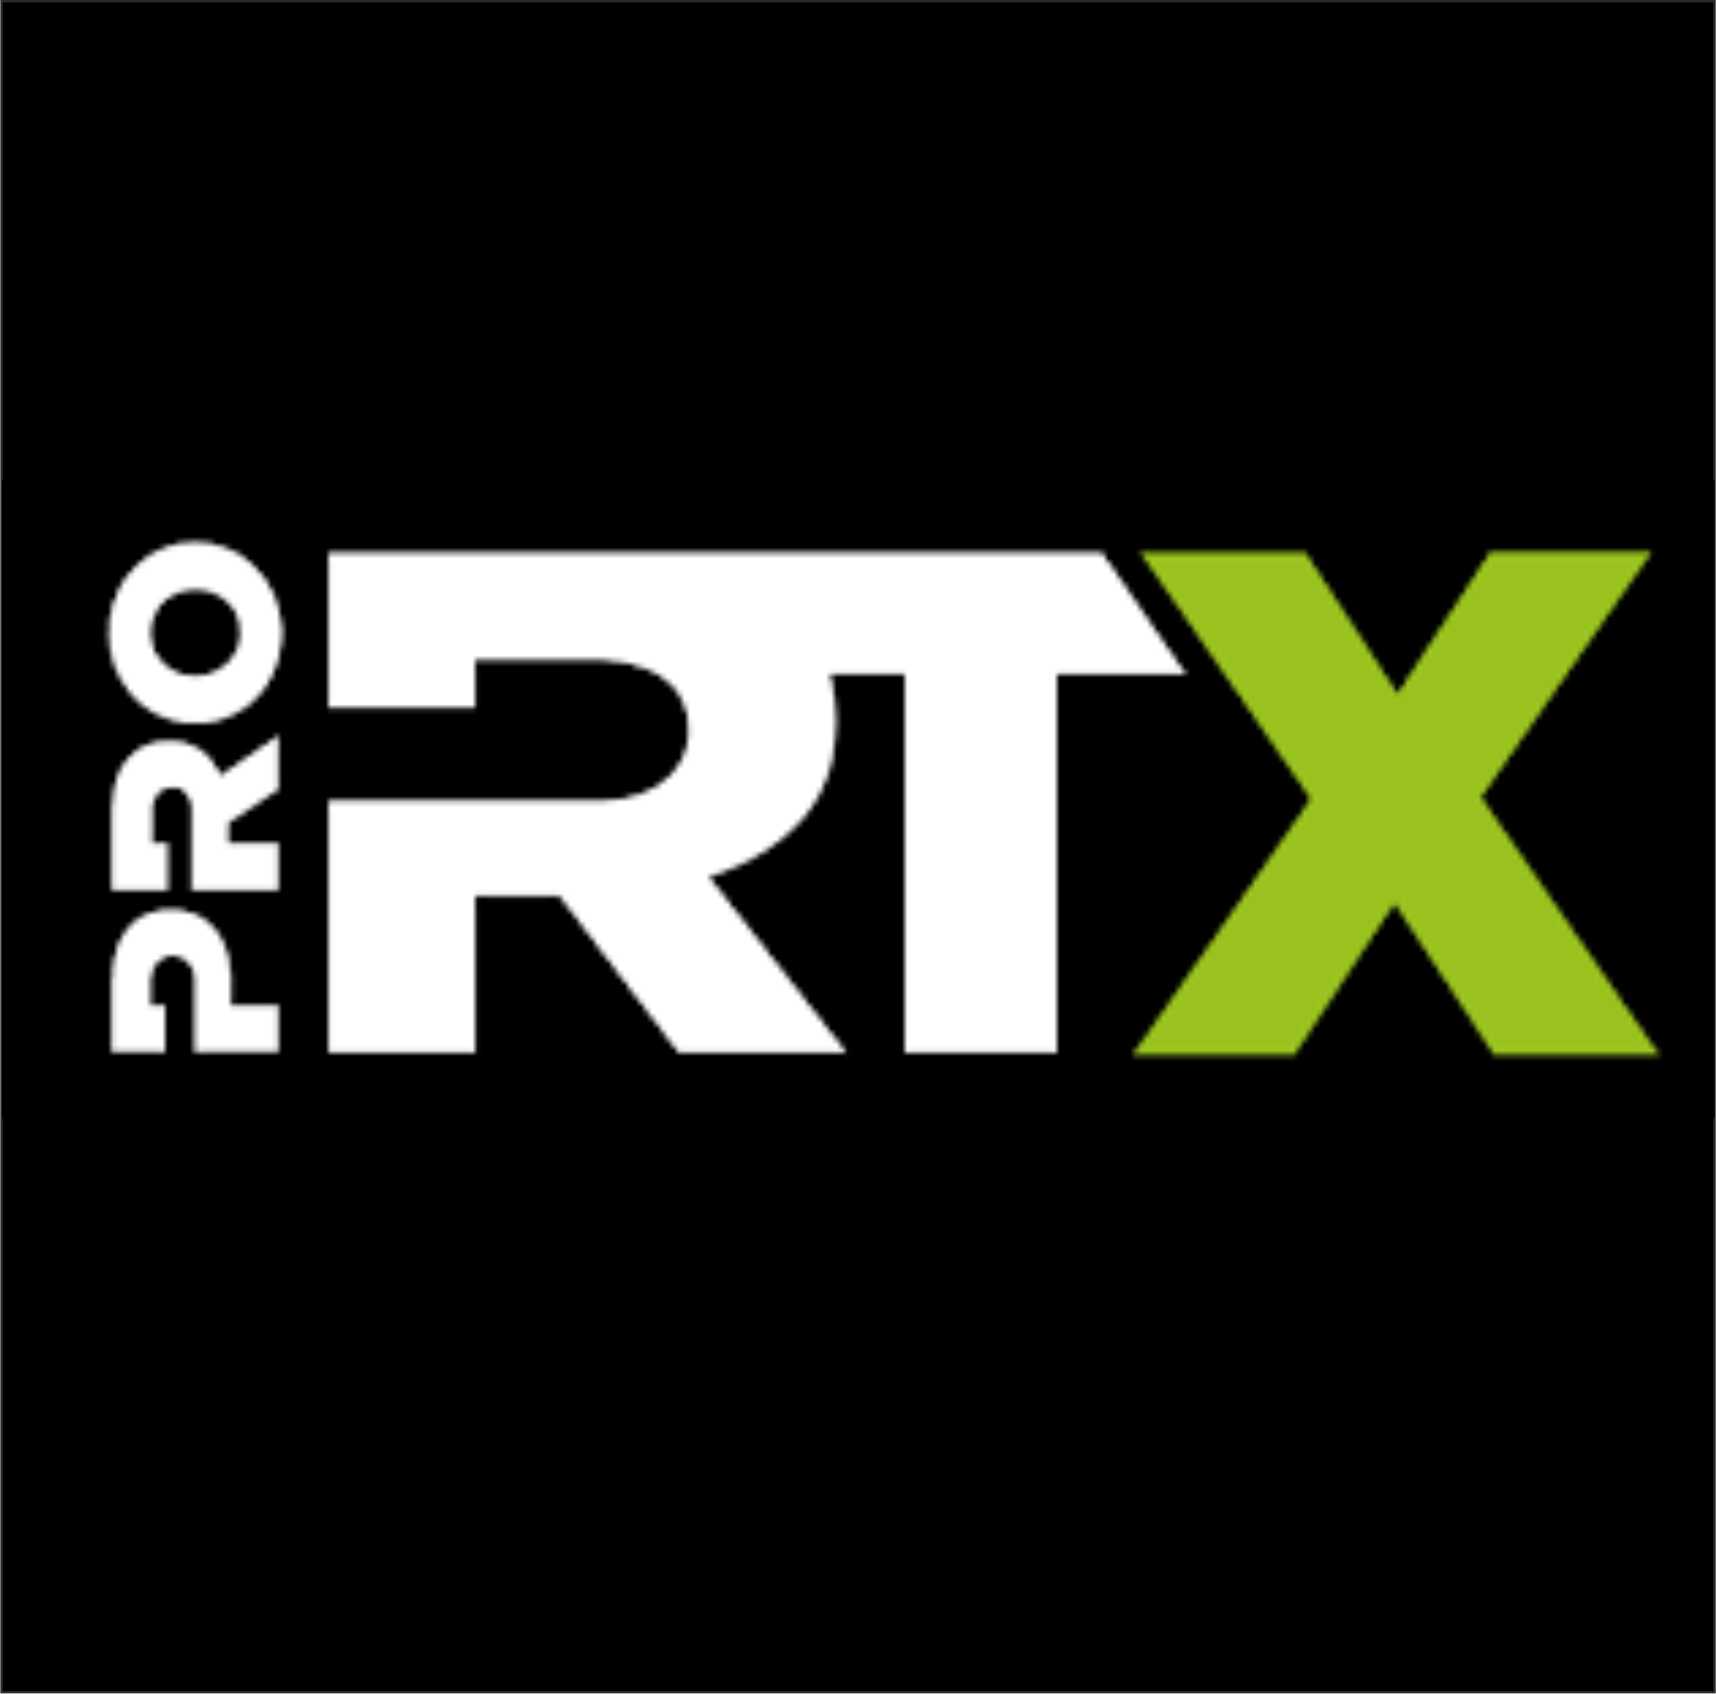 Pro RTX logo